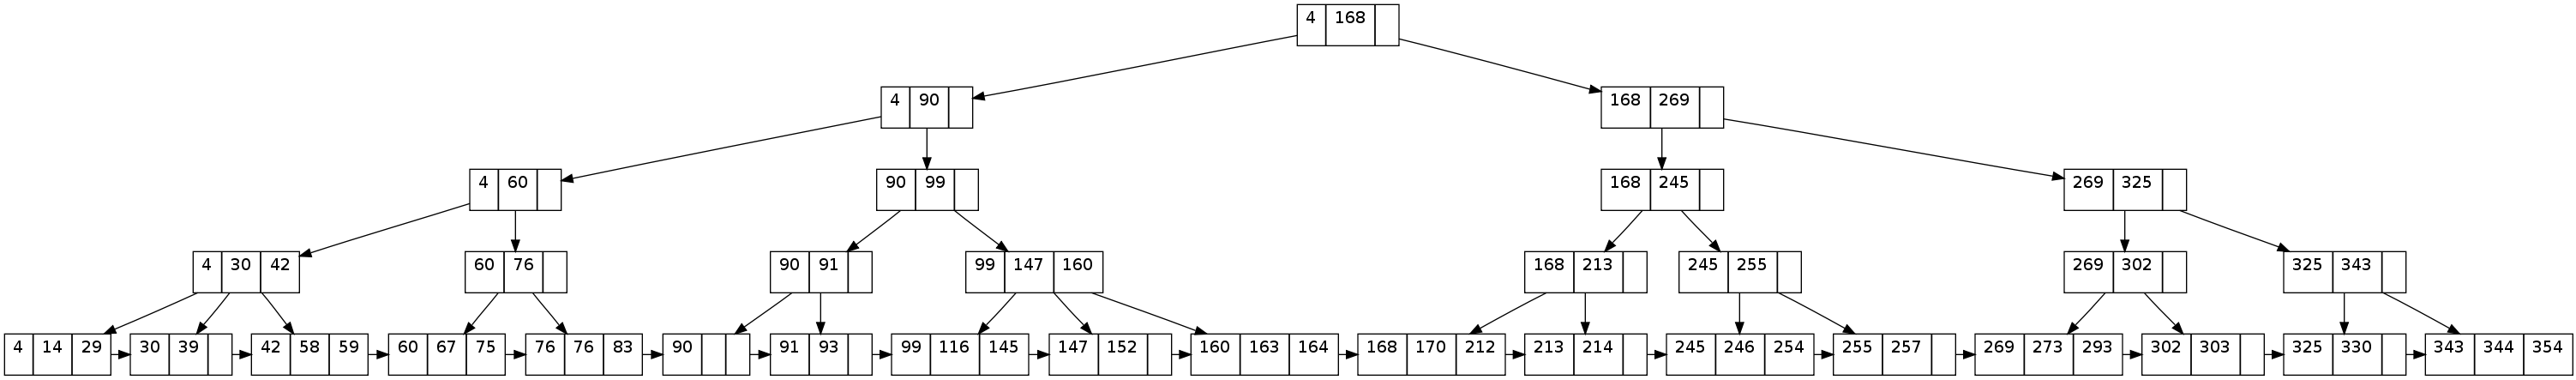 Example B+Tree